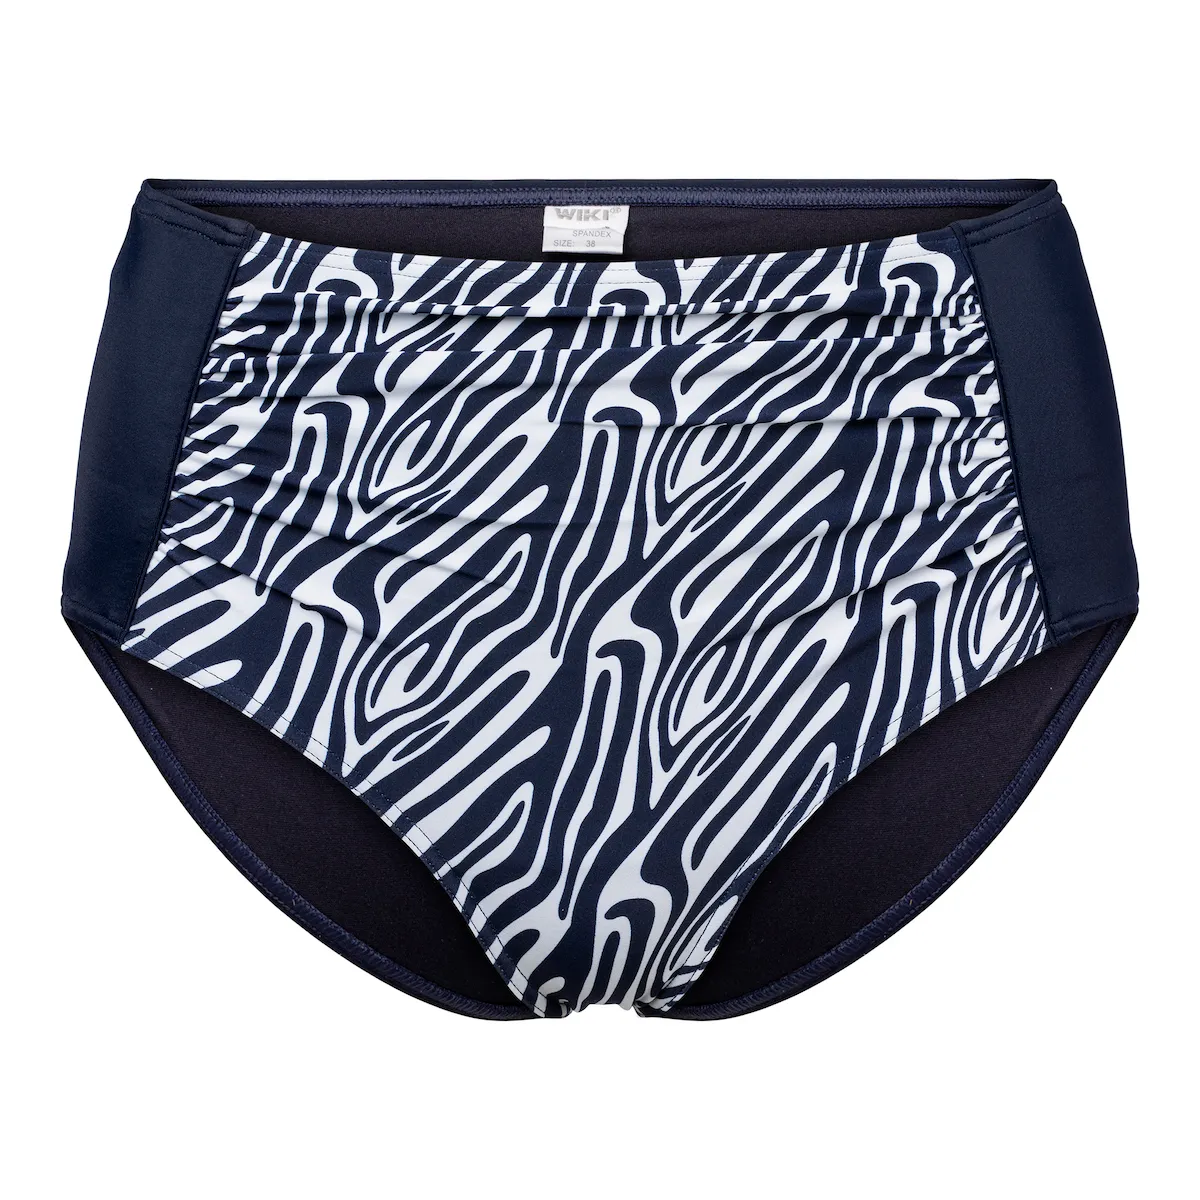 Shan Souplesse Celeste Tri Bikini Top – Melmira Bra & Swimsuits